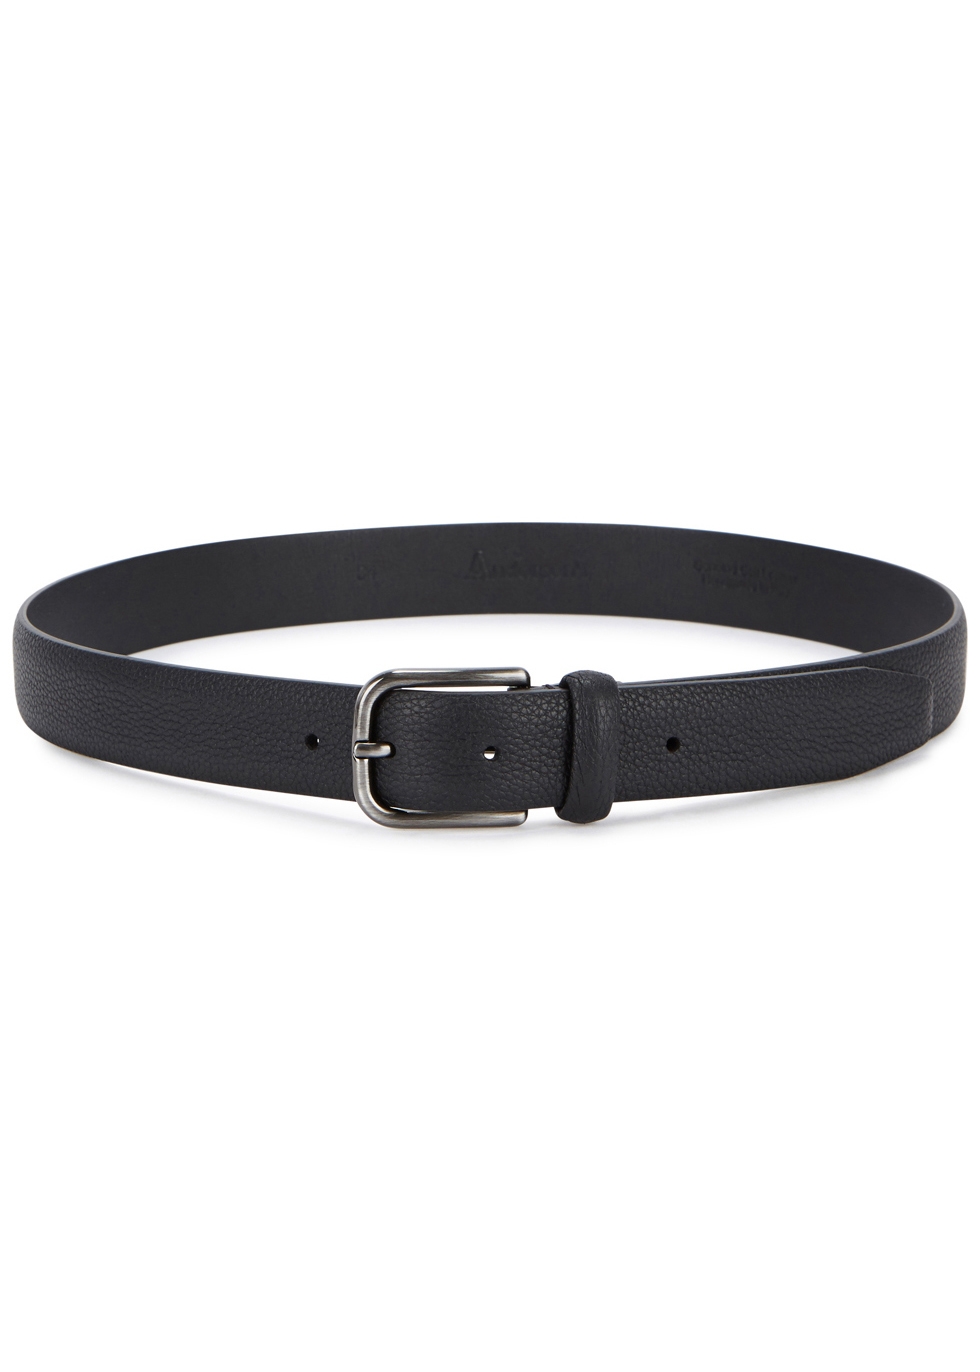 Anderson’s Black pebbled leather belt - Harvey Nichols